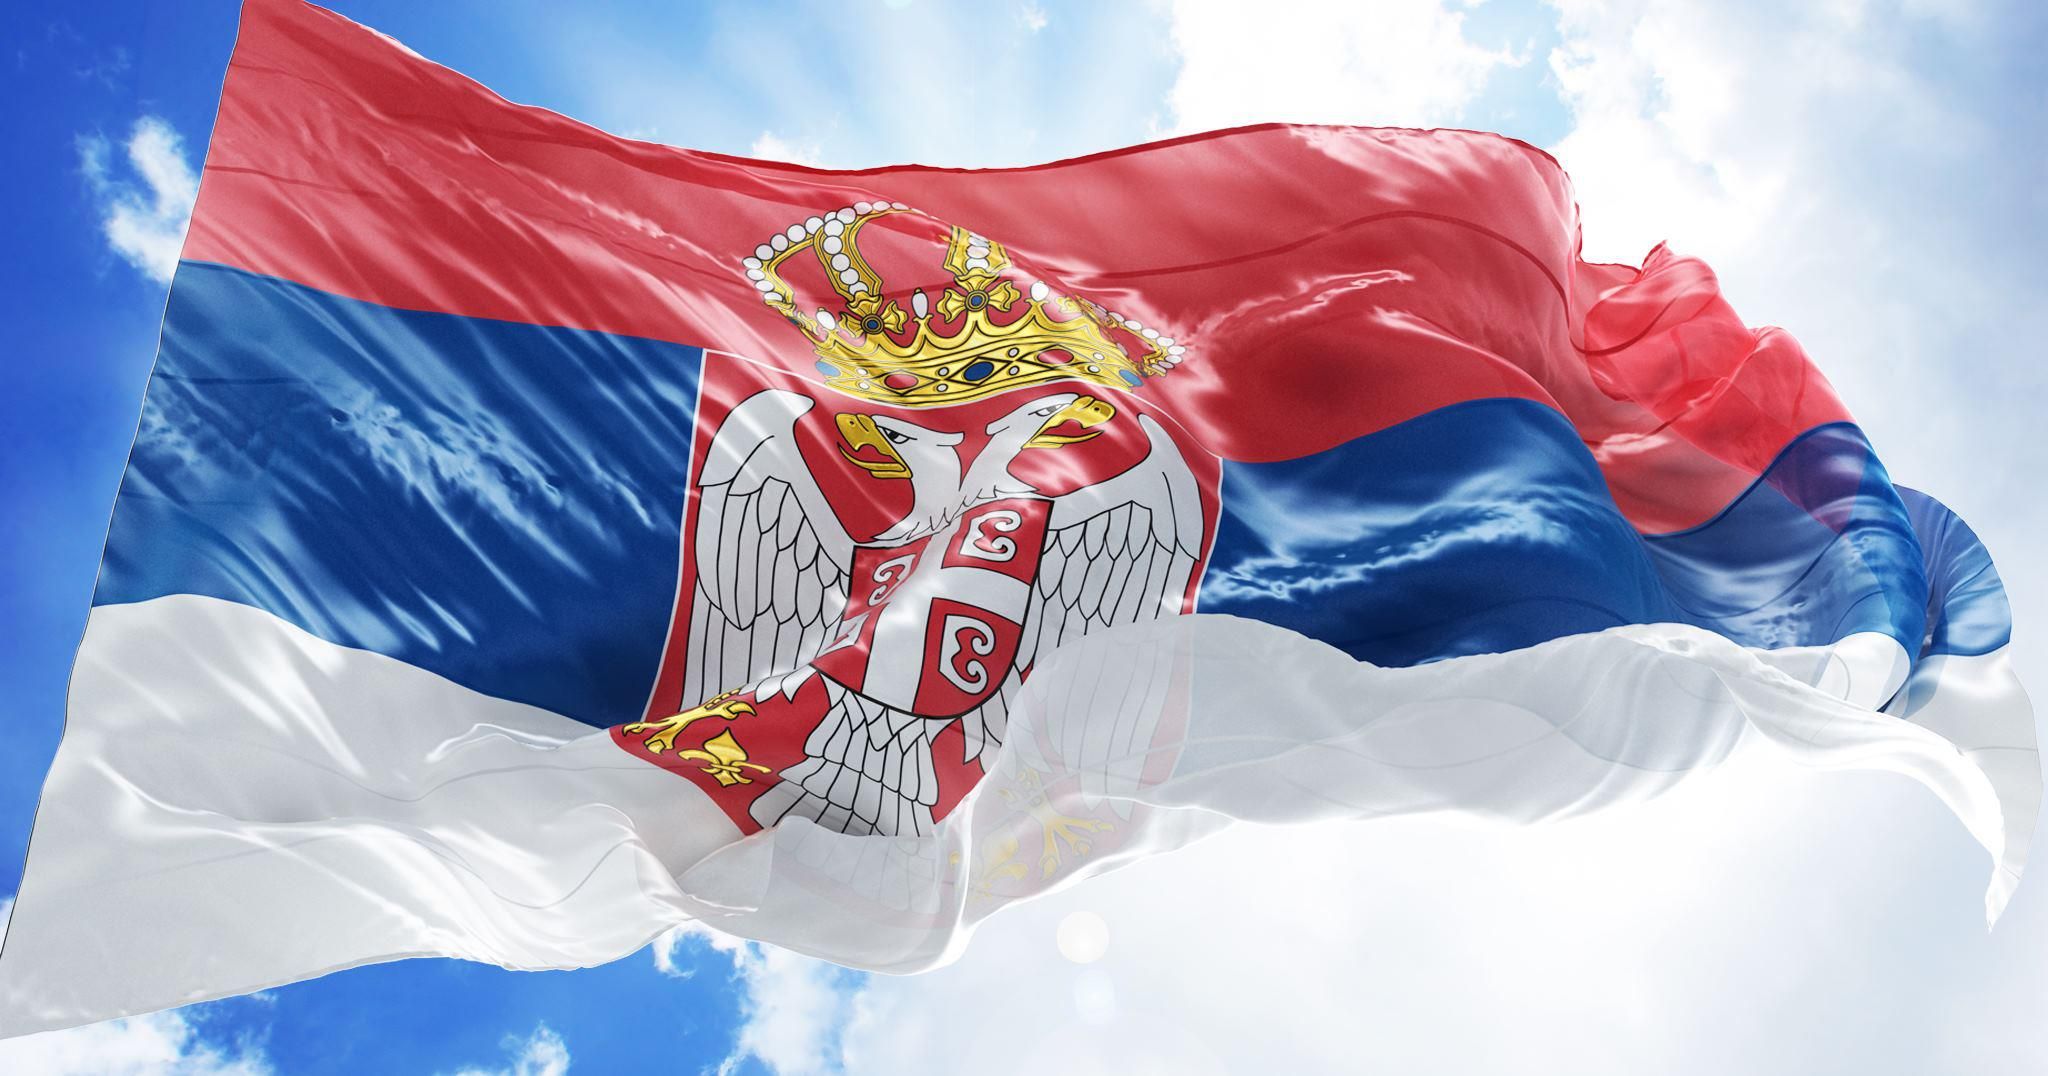 Dan državnosti Republike Srbije - Neradan dan